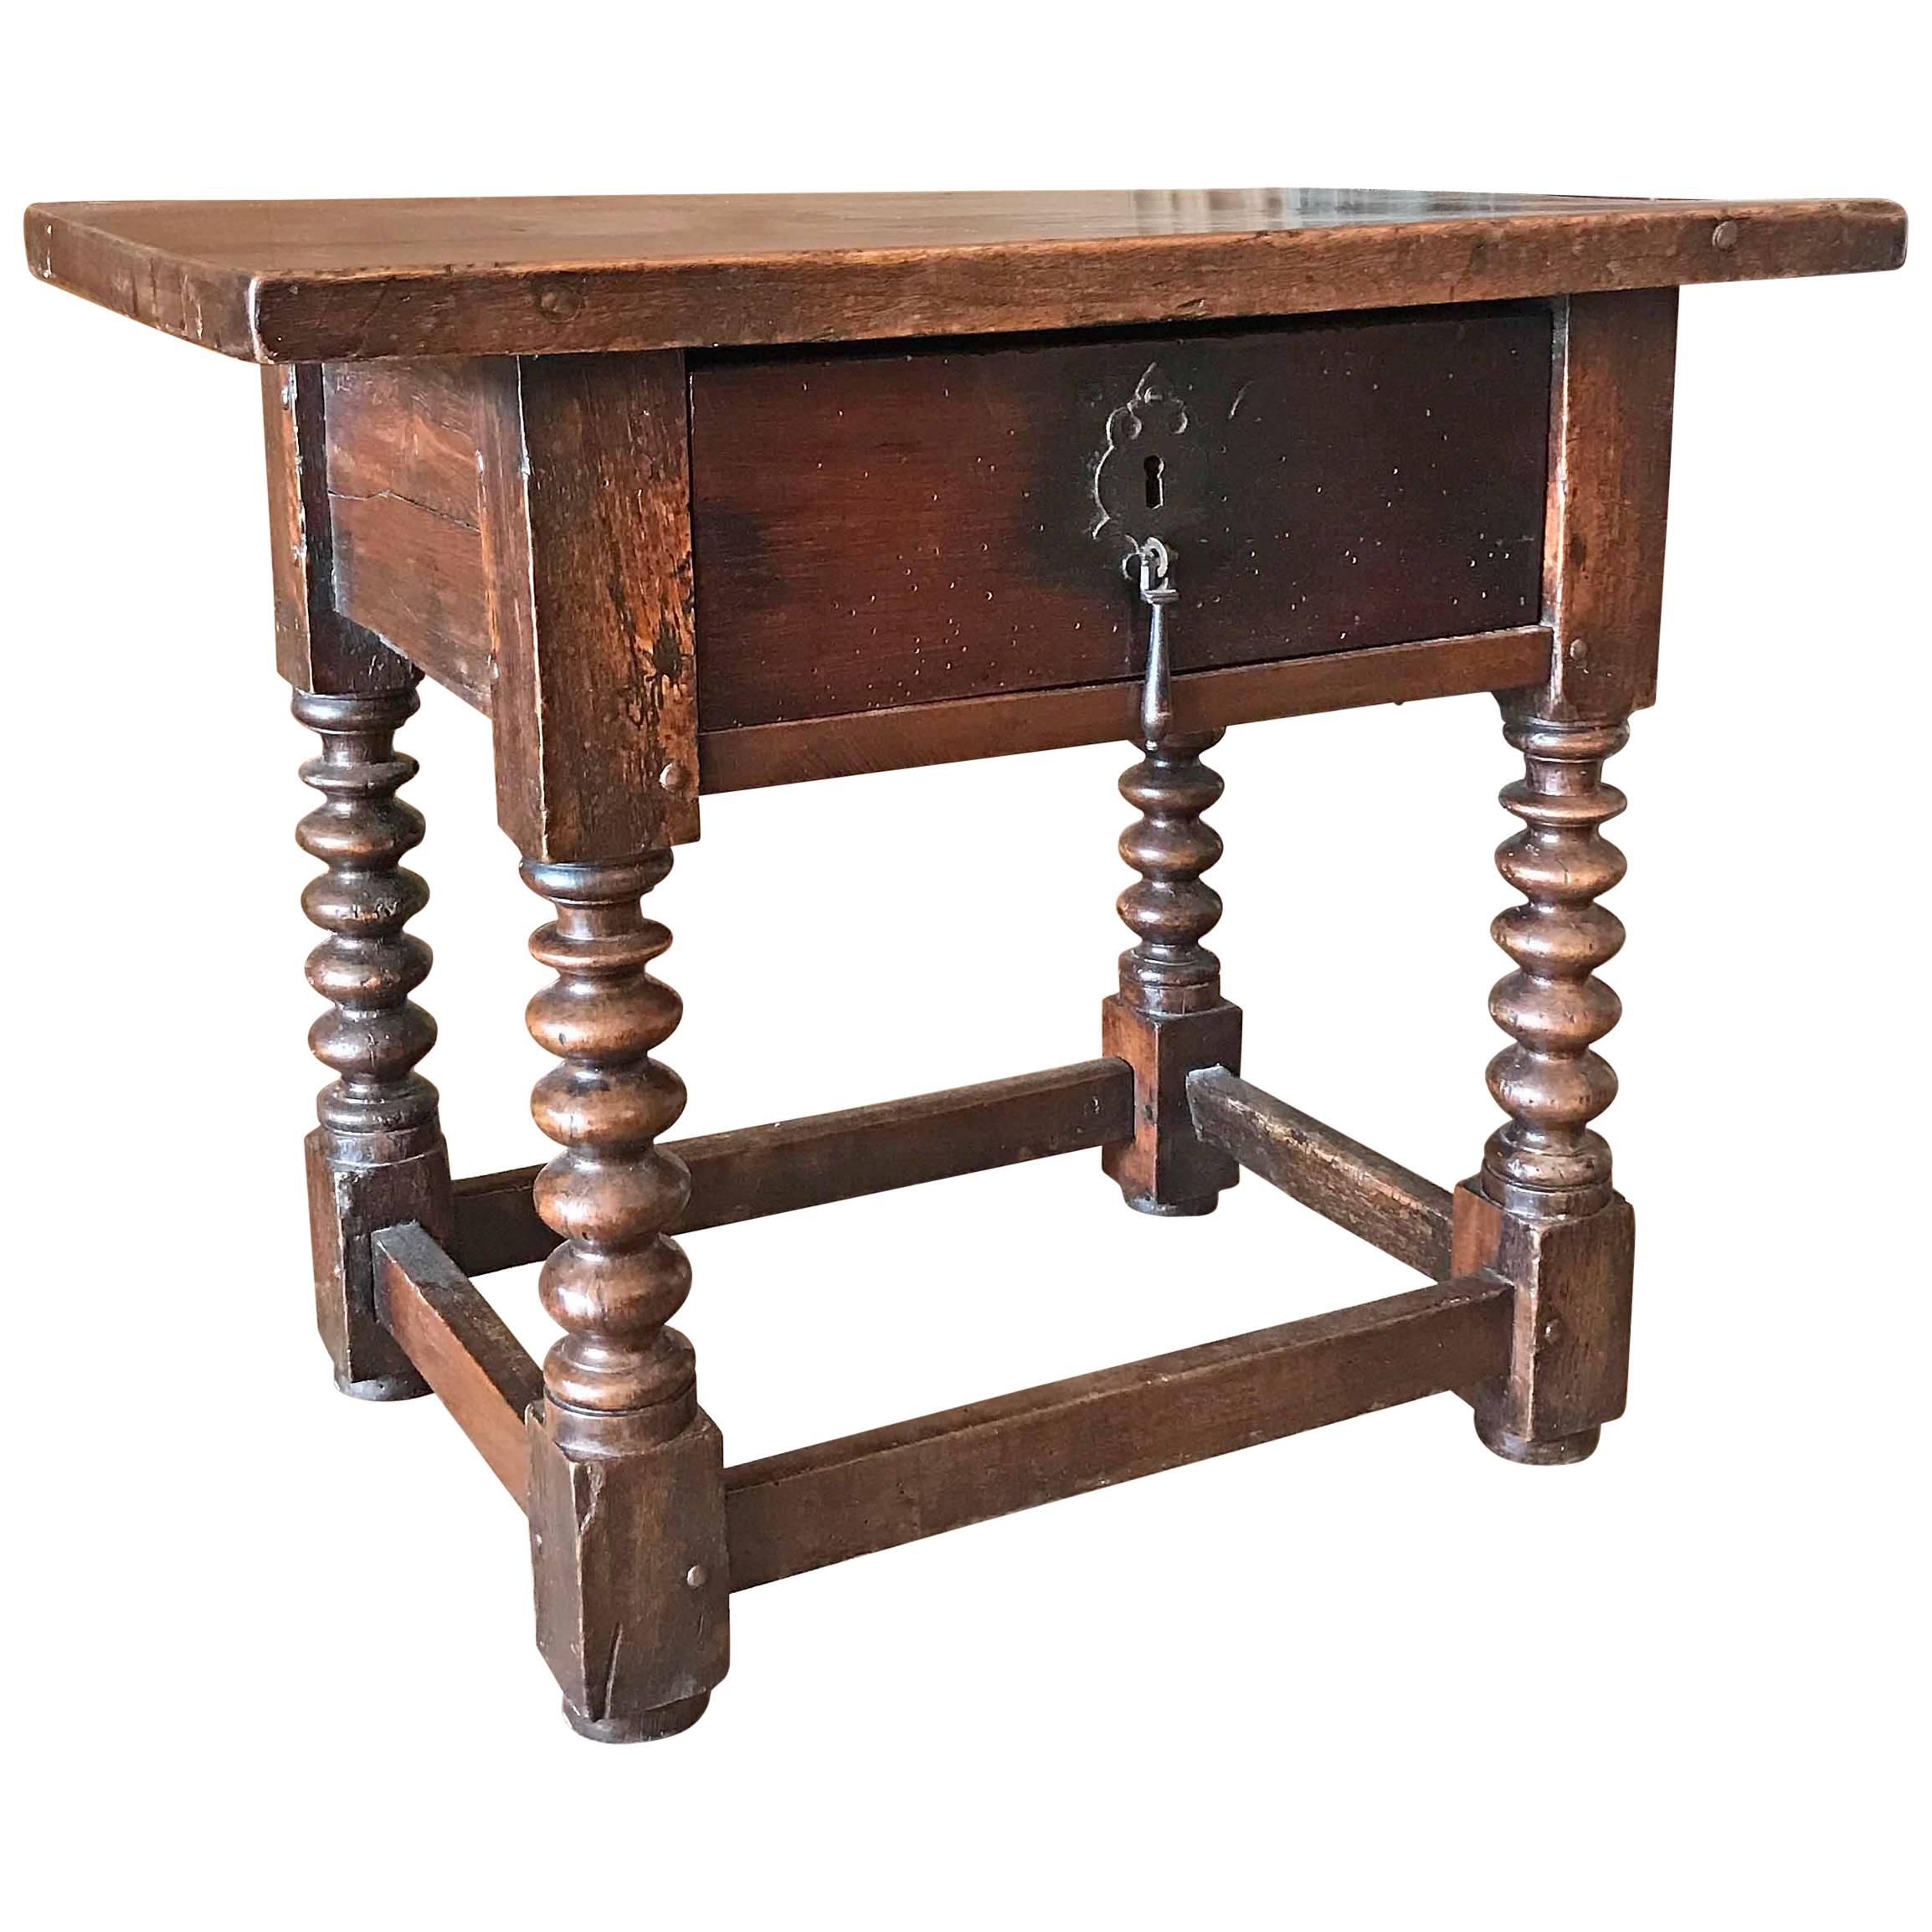 Antique Spanish Side Table, circa 1820